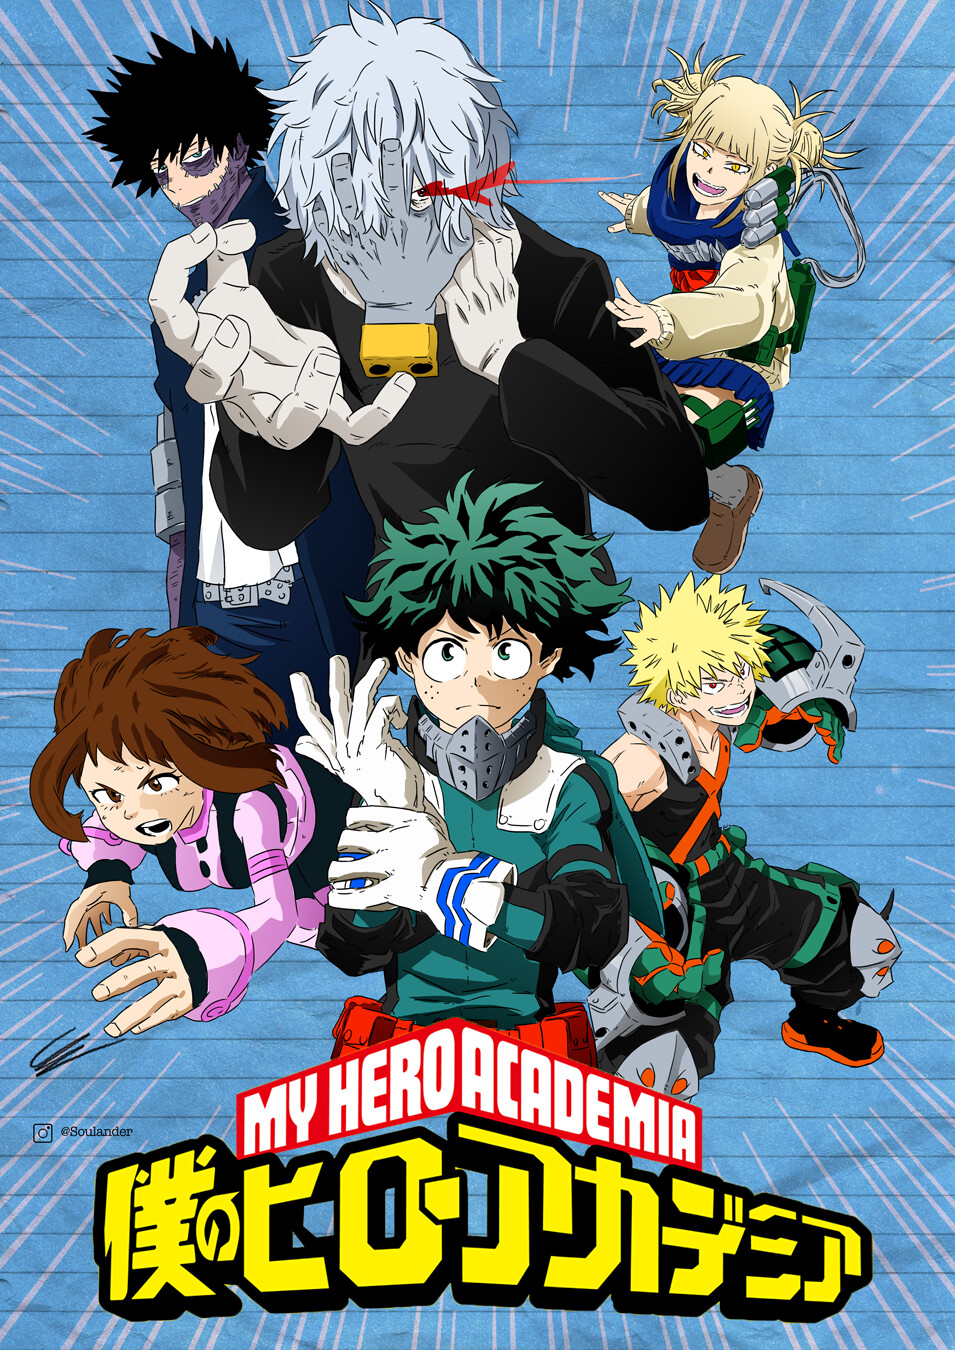 ArtStation - My Hero Academia Season 4 Poster